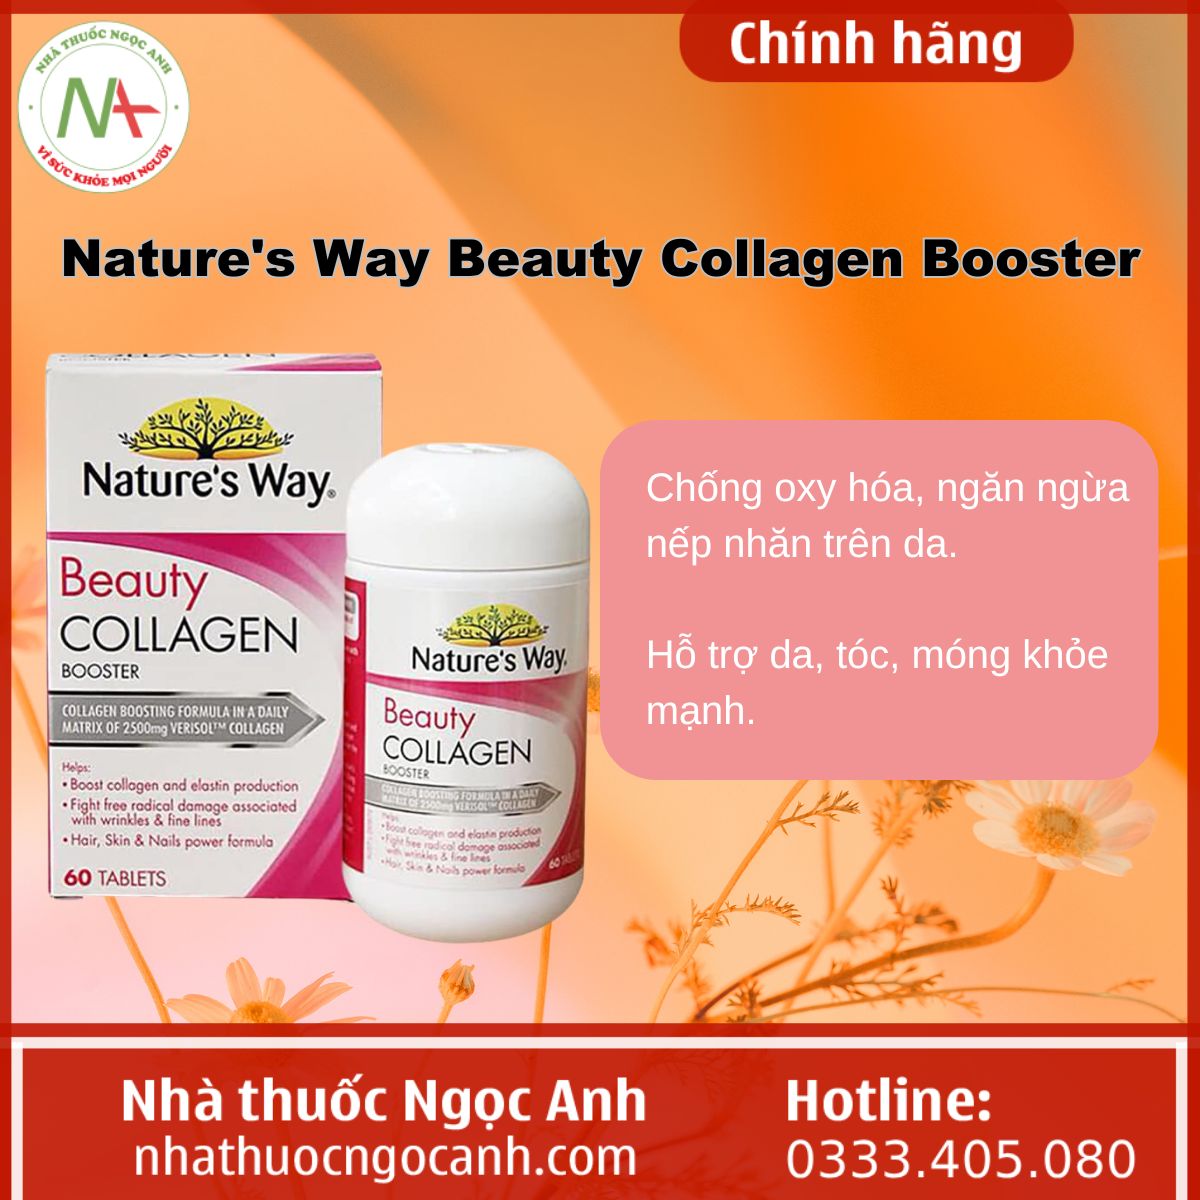 Nature's Way Beauty Collagen Booster duõng da hiệu quả